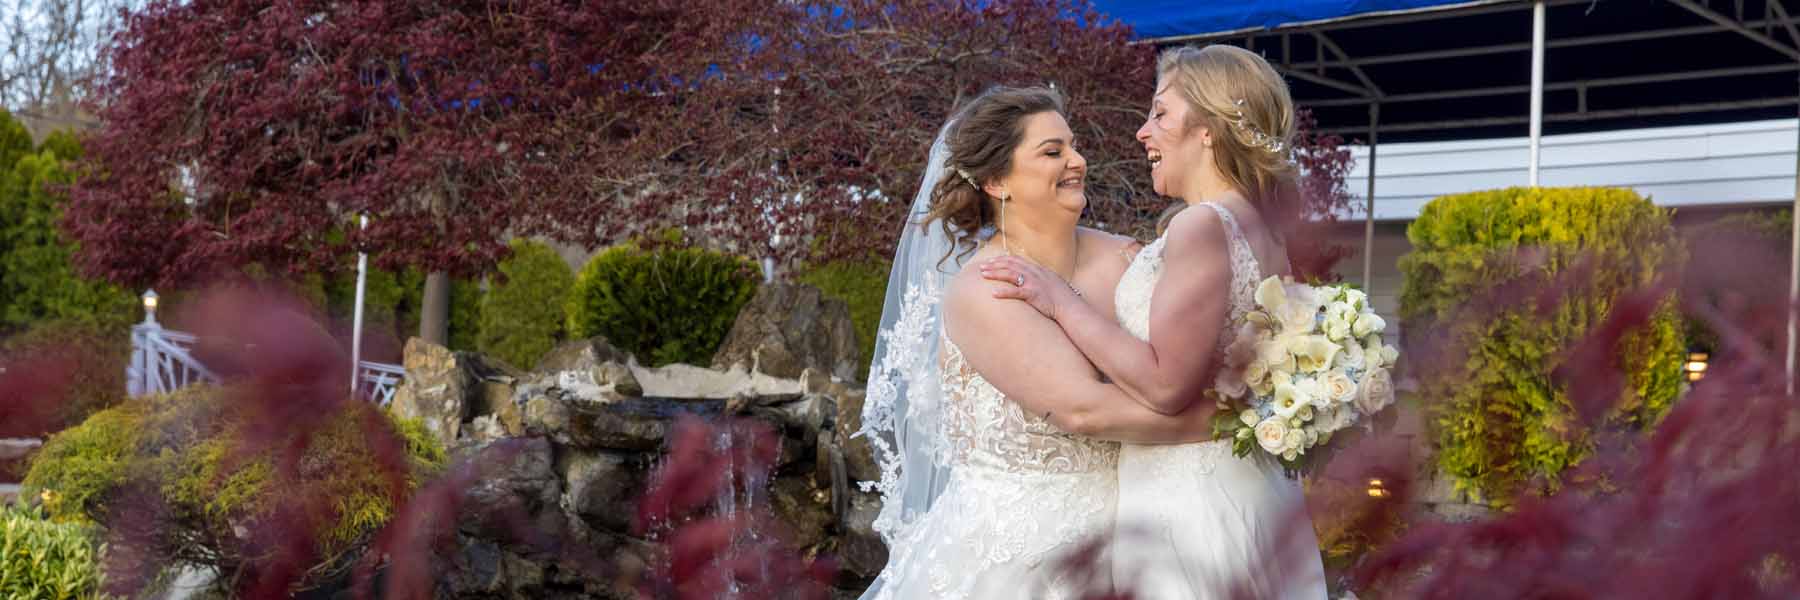 LGBTQ Wedding Venues Long Island